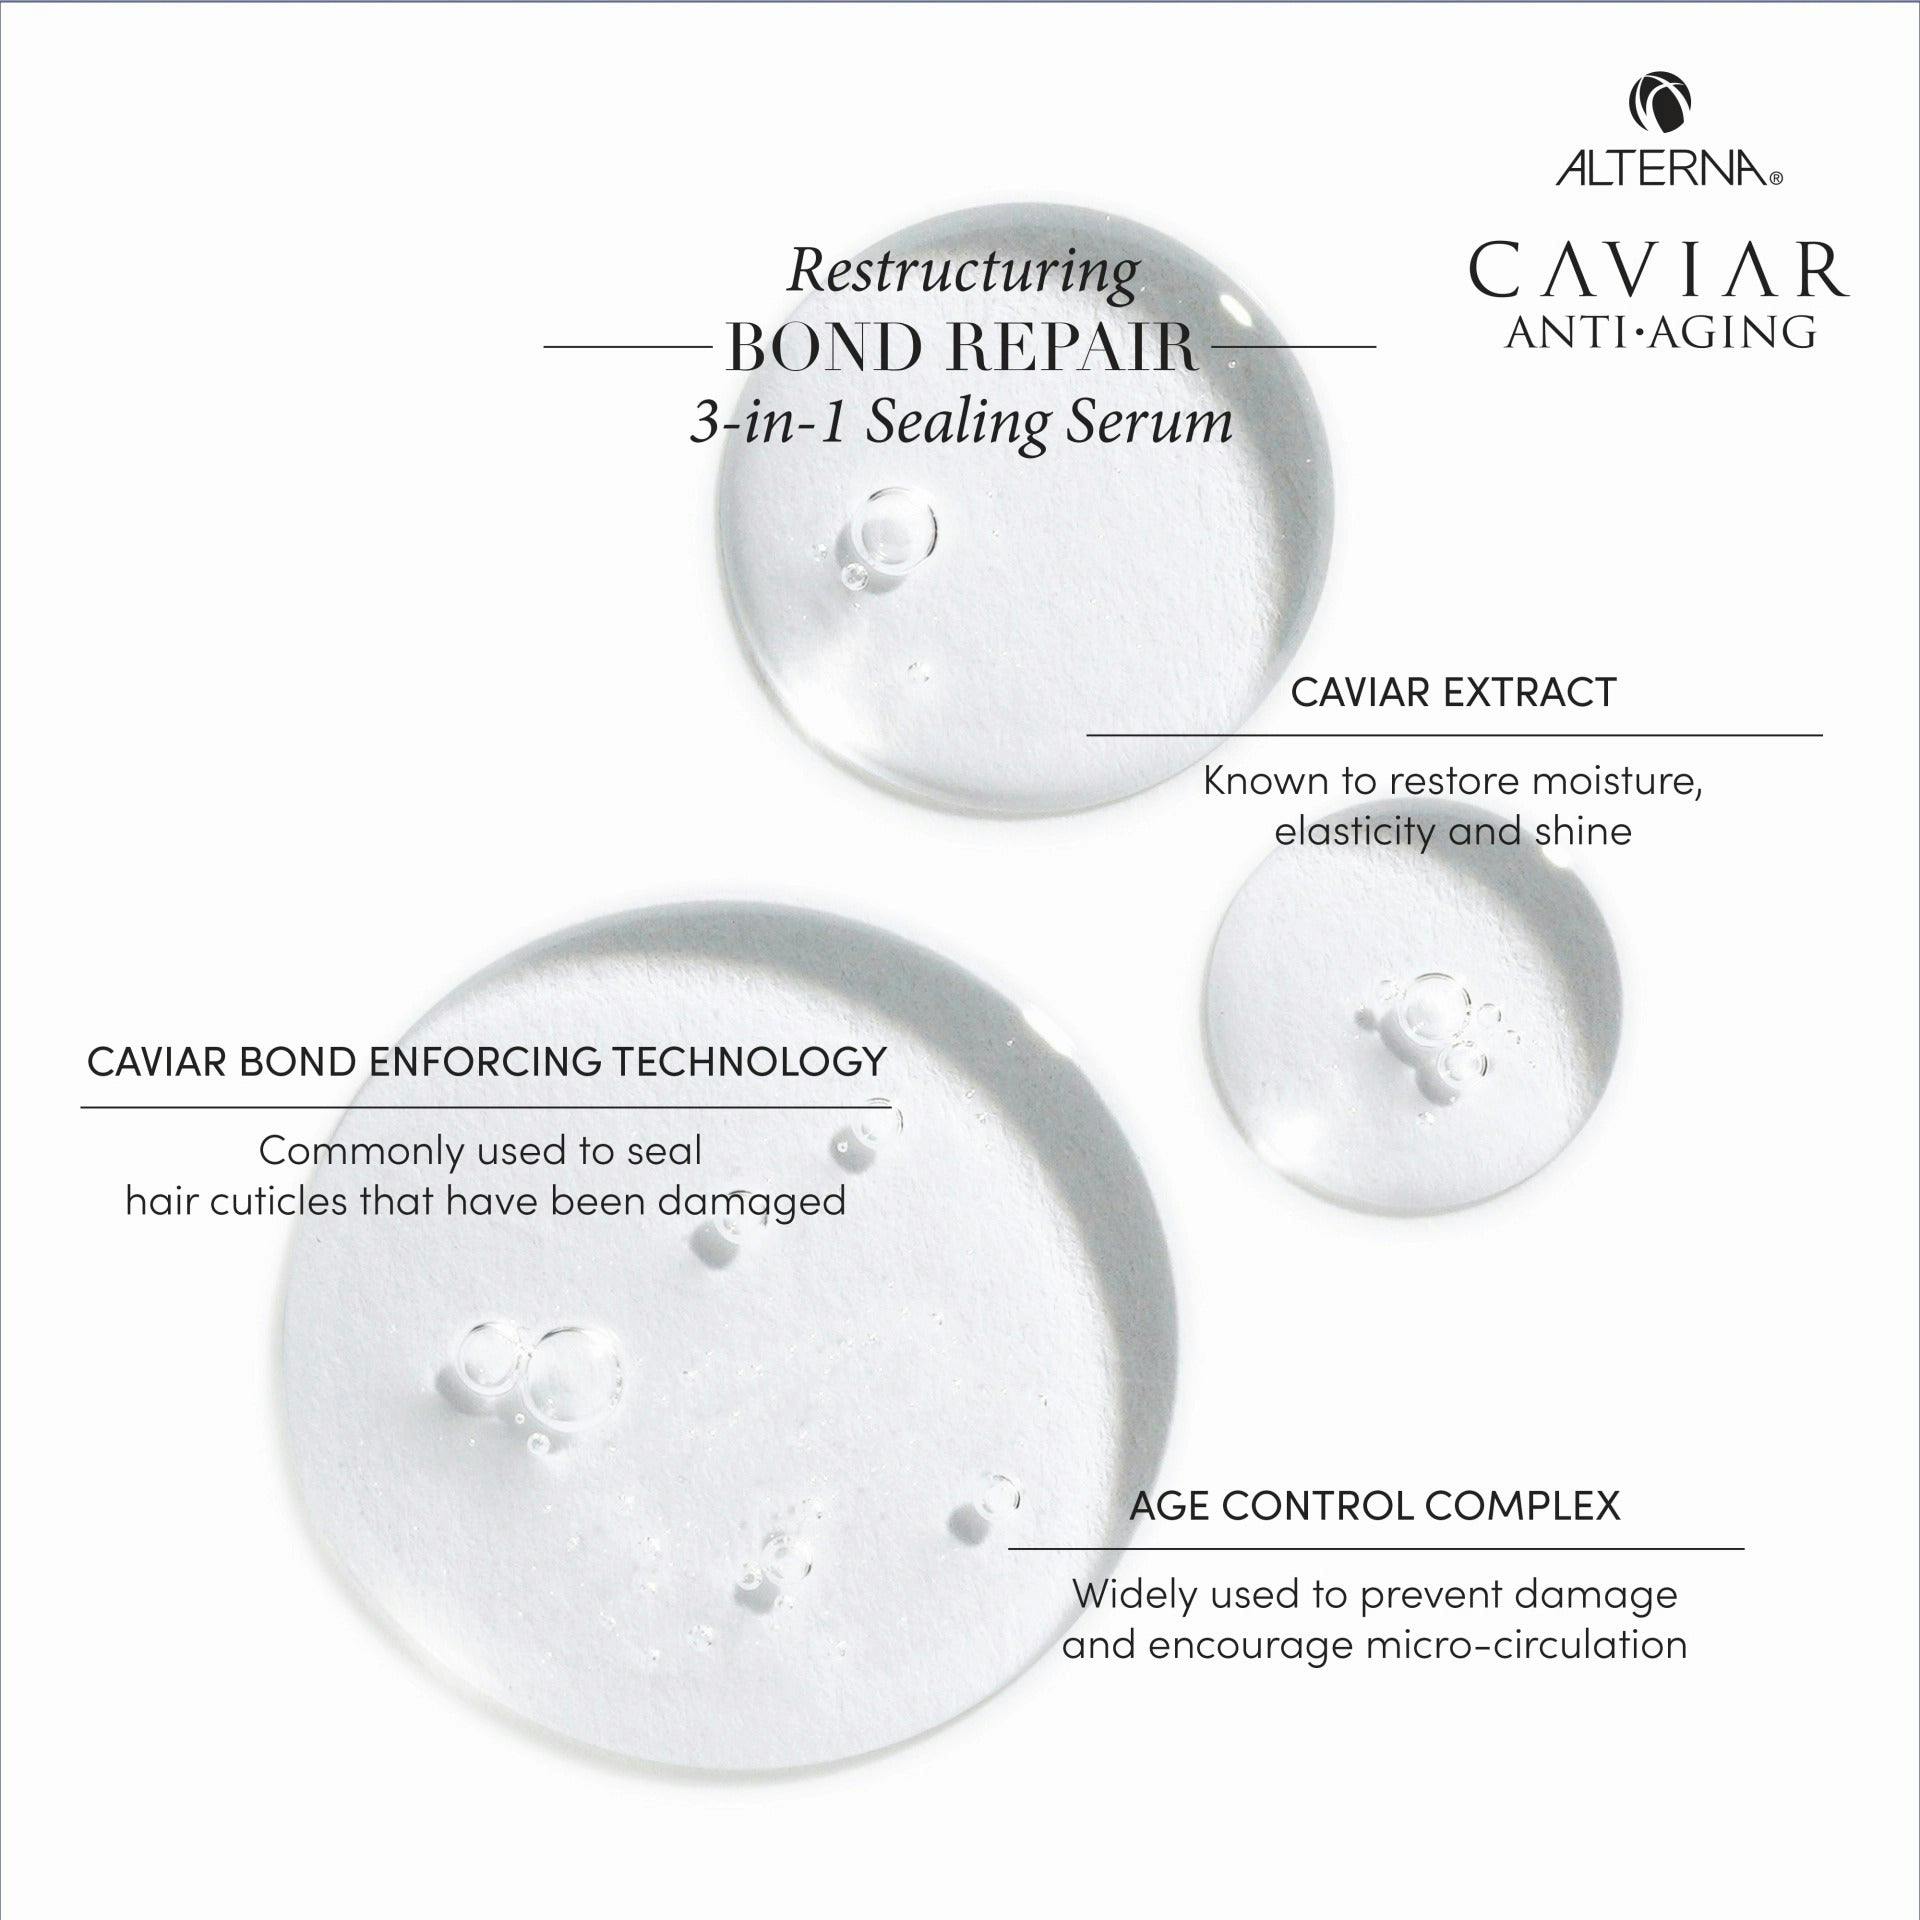 Alterna Caviar Restructuring Bond Repair 3-in-1 Sealing Serum 50ml